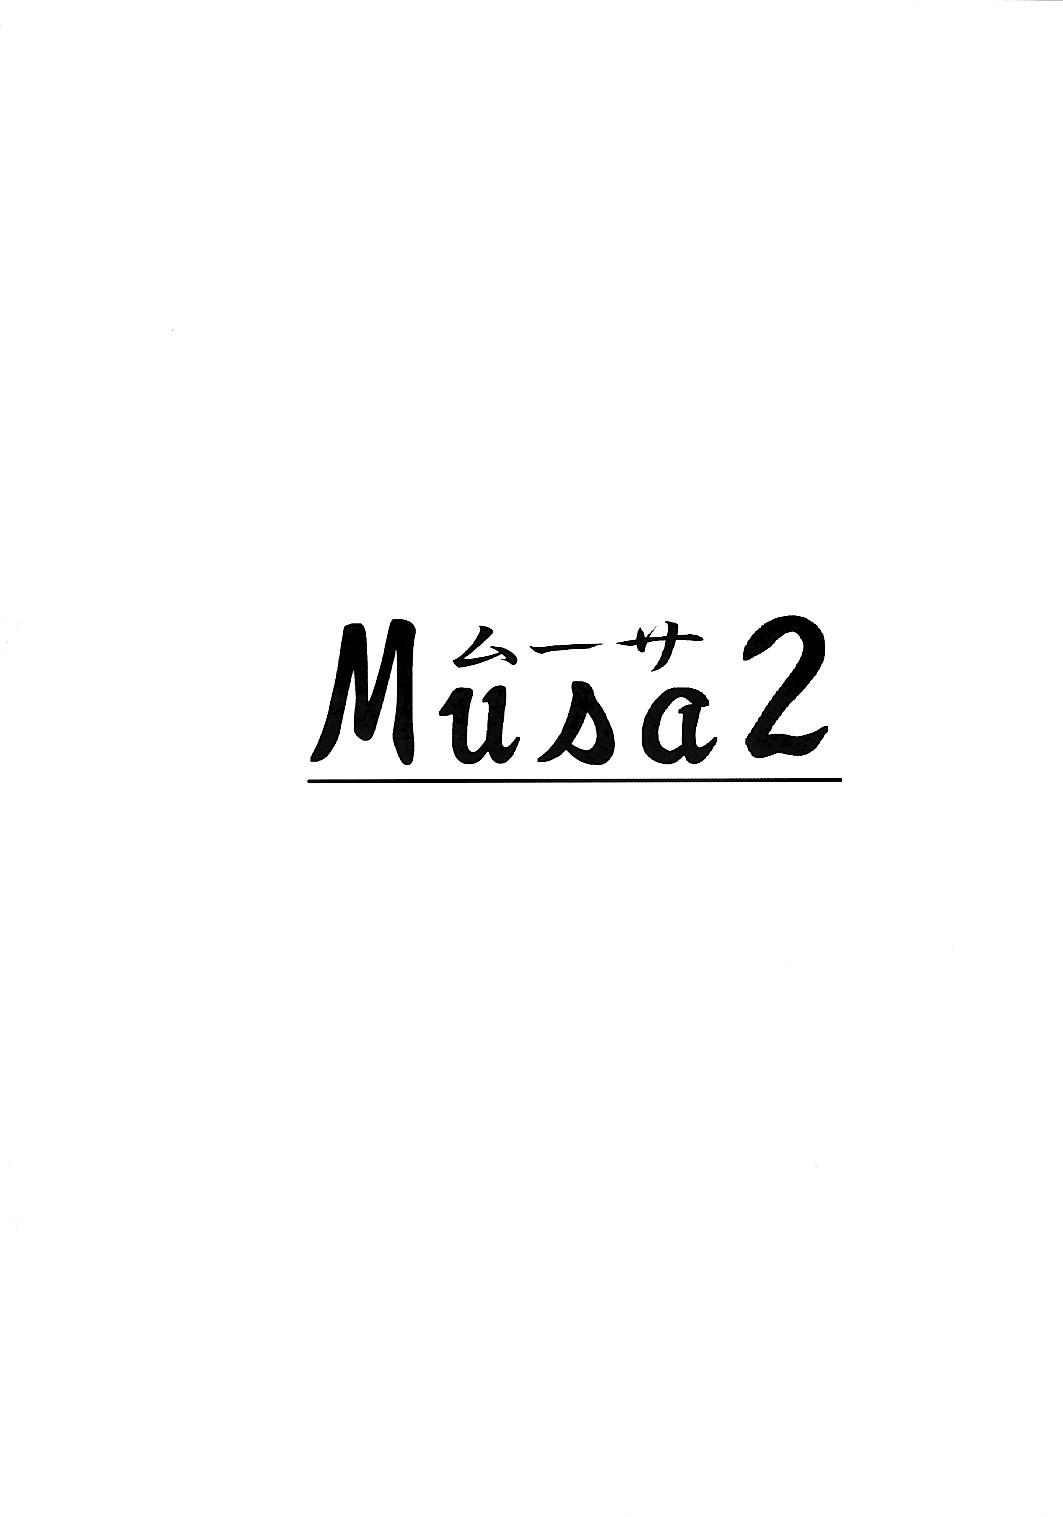 Musa 2 1